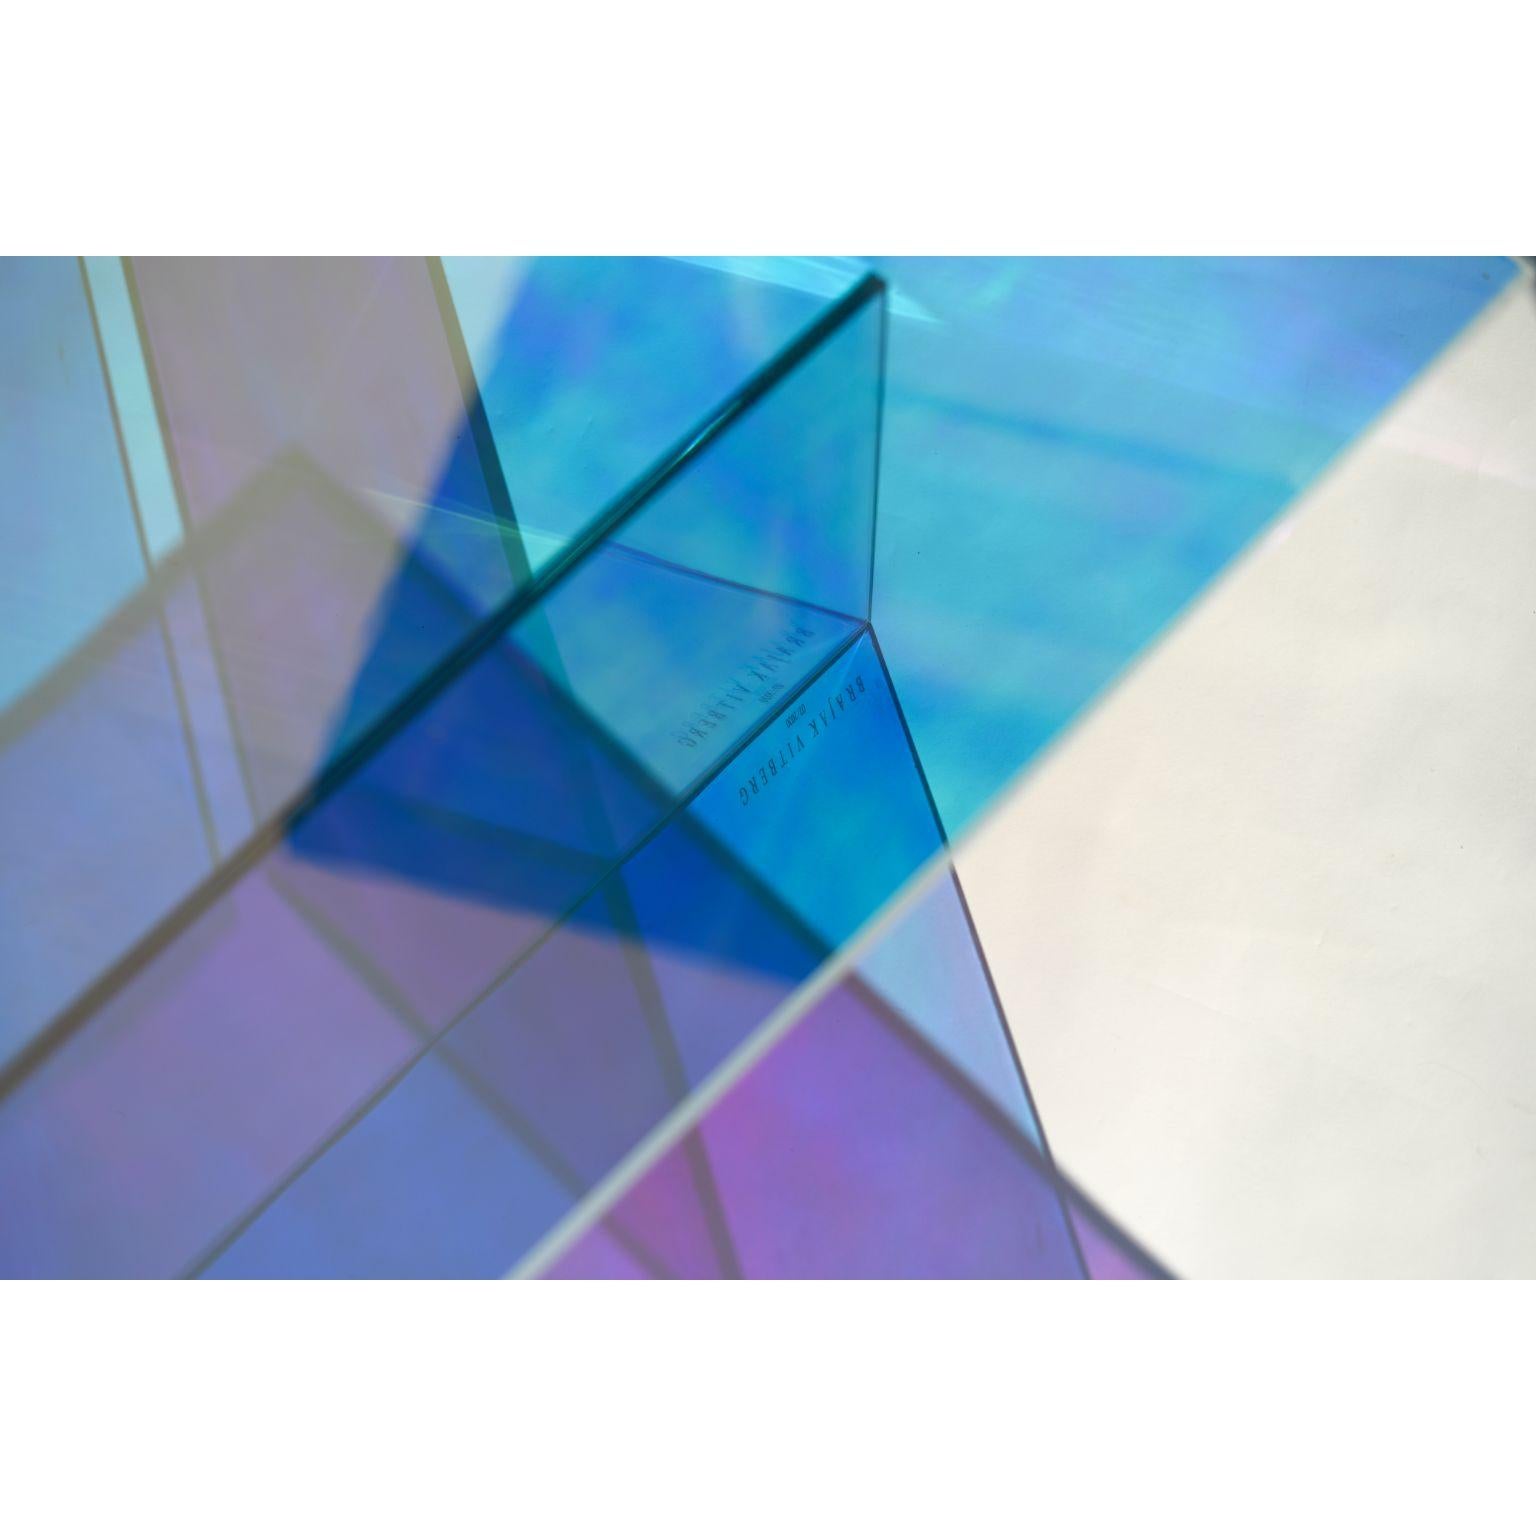 Kinetic Colors Glass Table by Brajak Vitberg 2